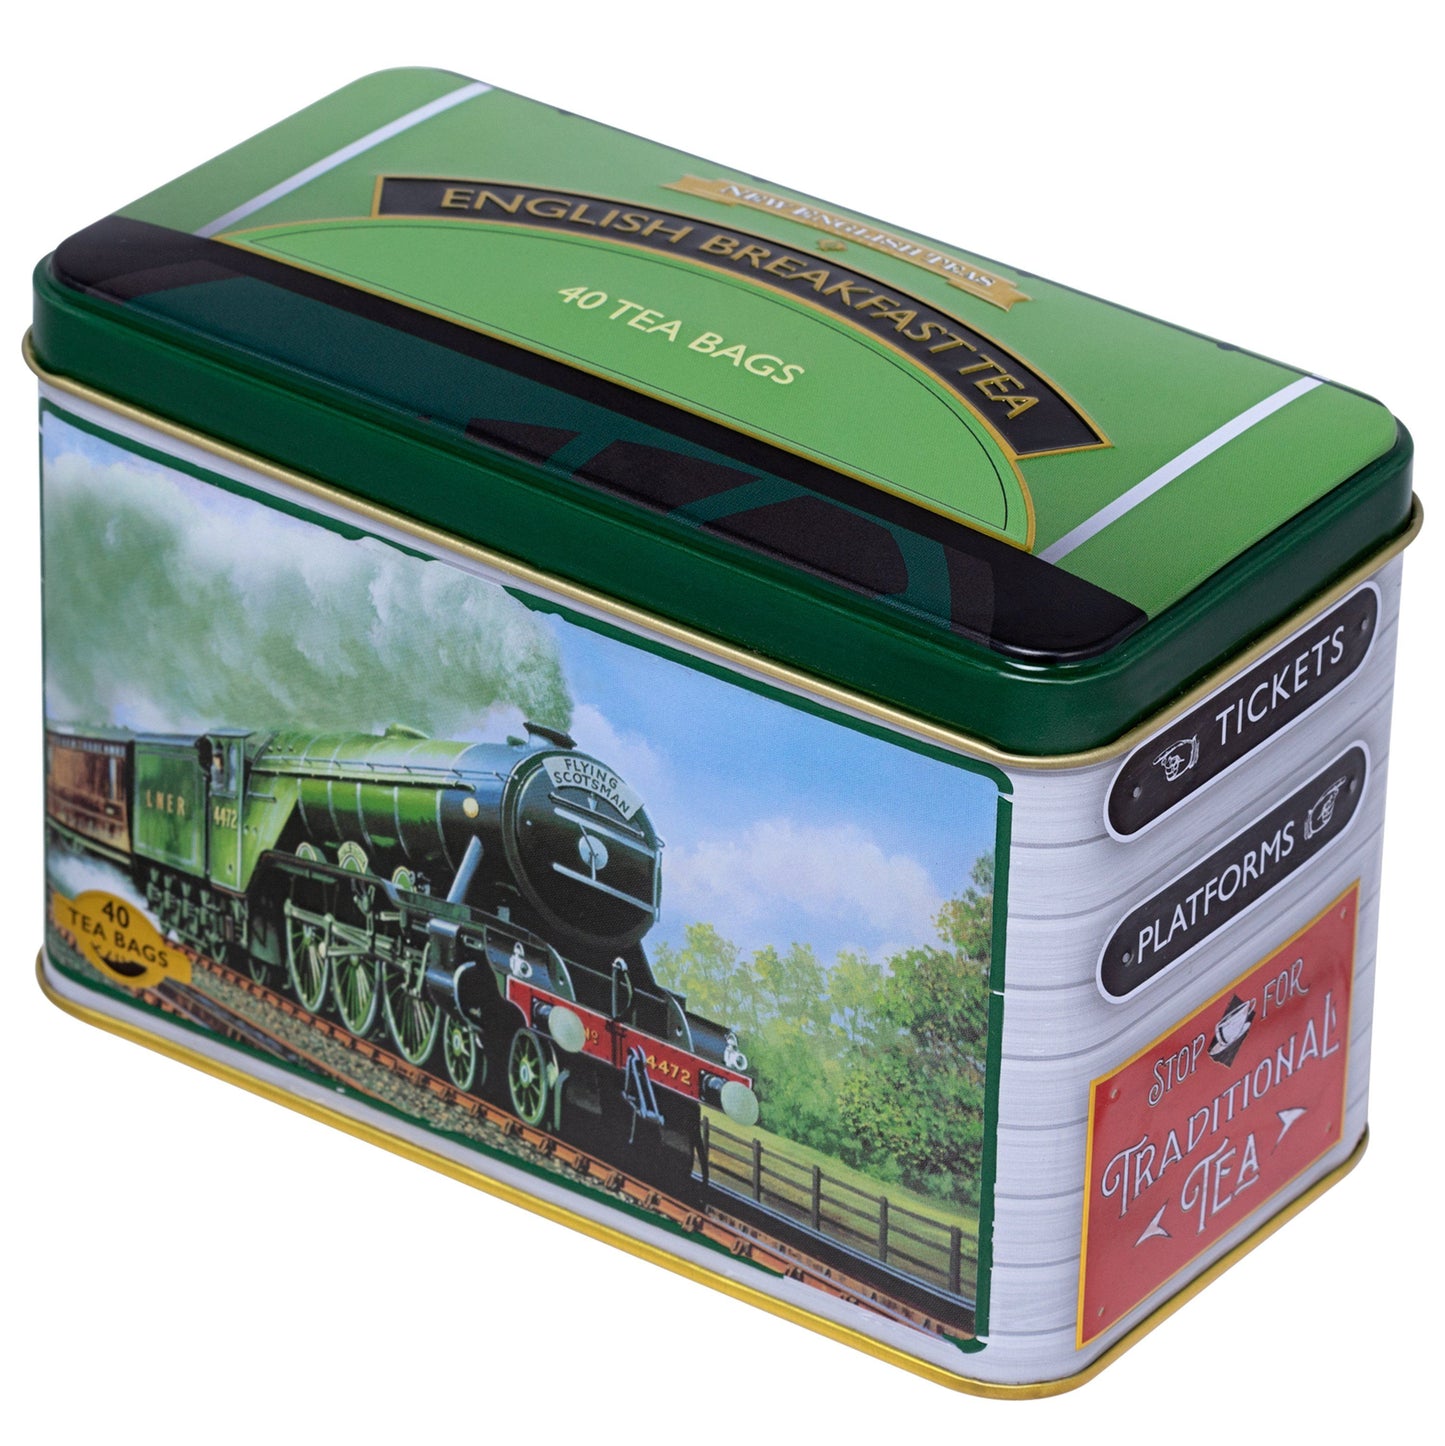 Flying Scotsman Tea Tin with 40 English Breakfast Teabags Black Tea New English Teas 